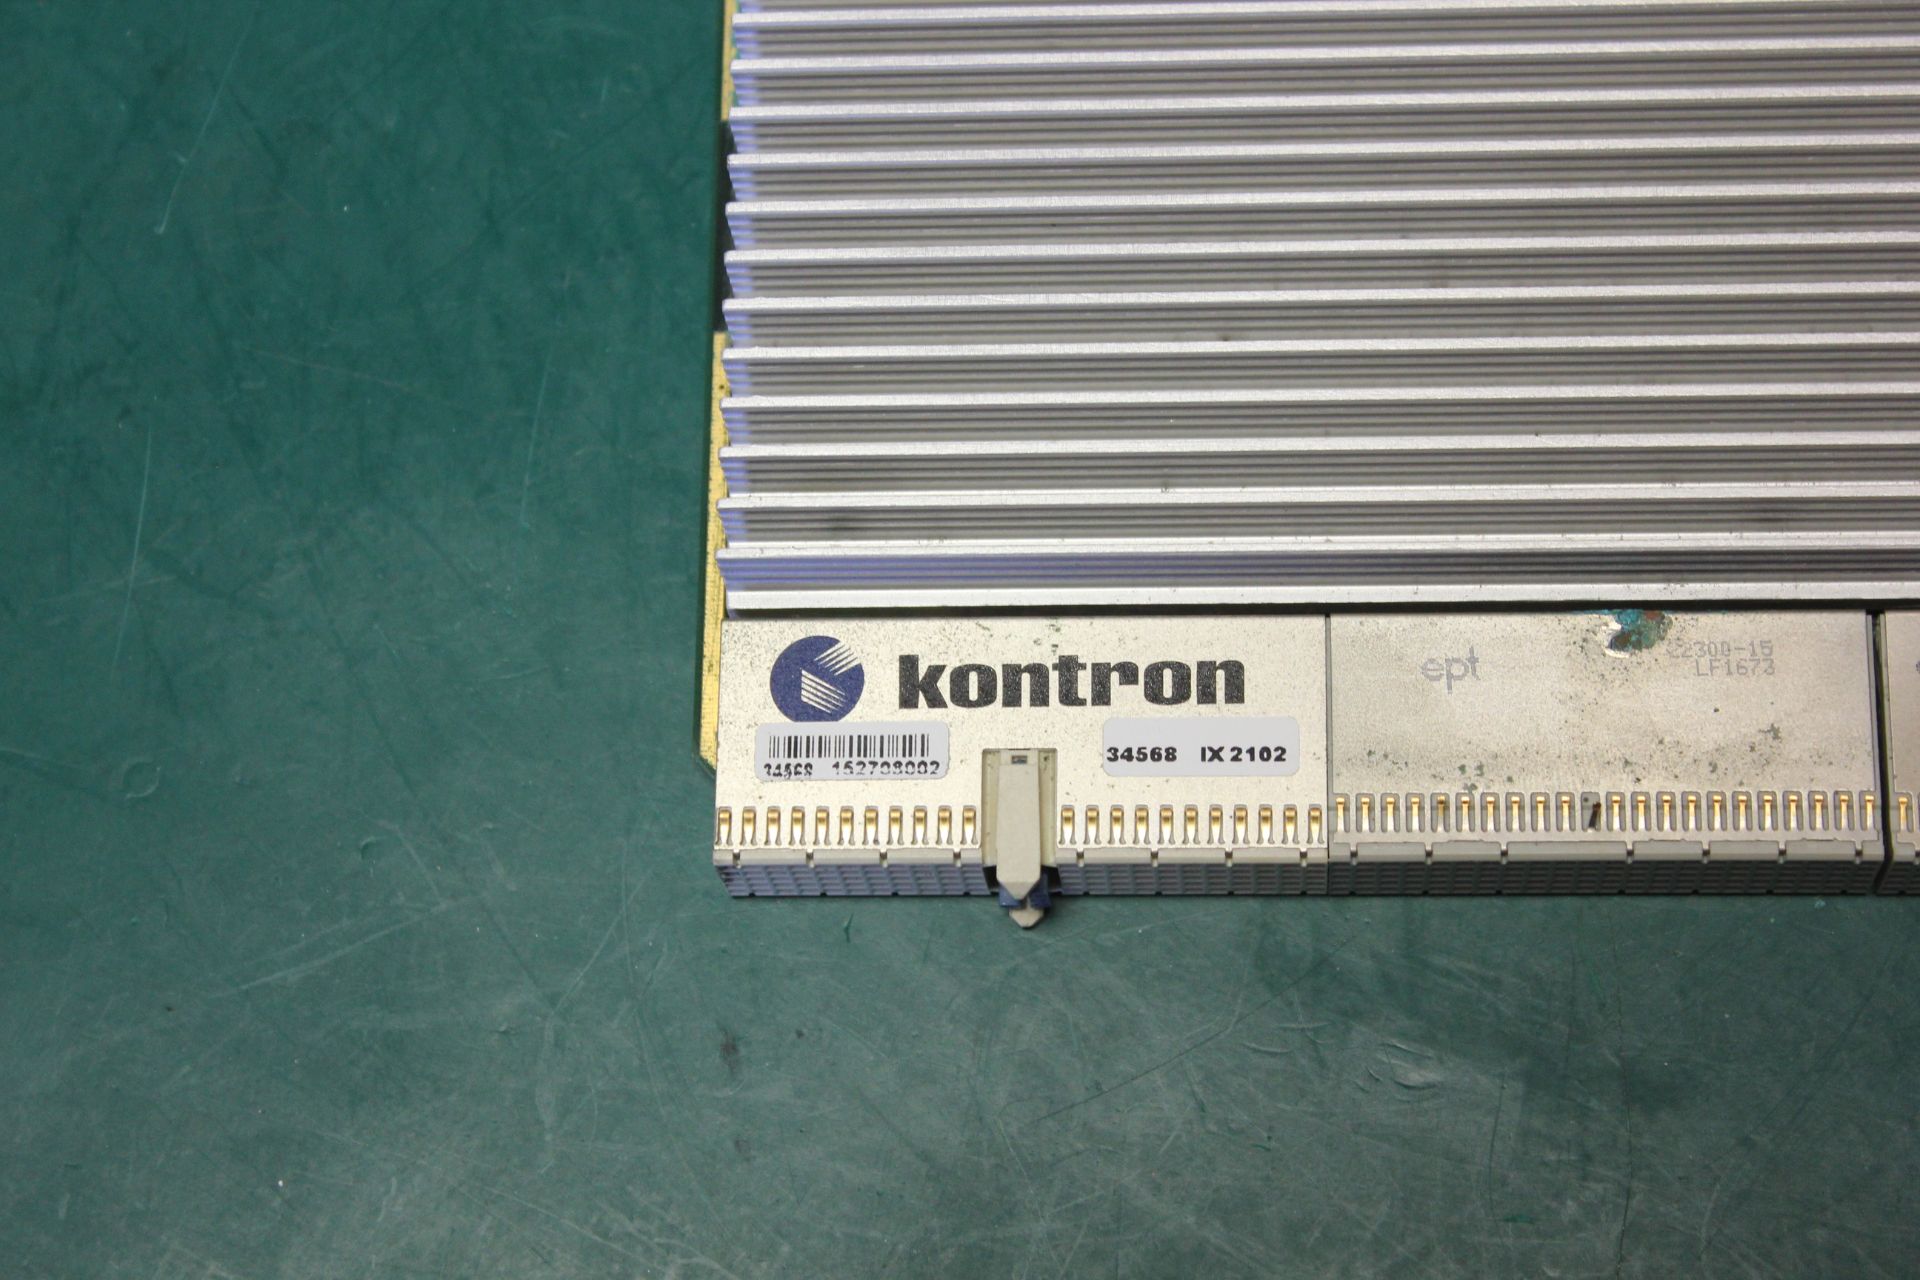 KONTRON 6U cPCI CPU BOARD CP6012 - Image 7 of 12